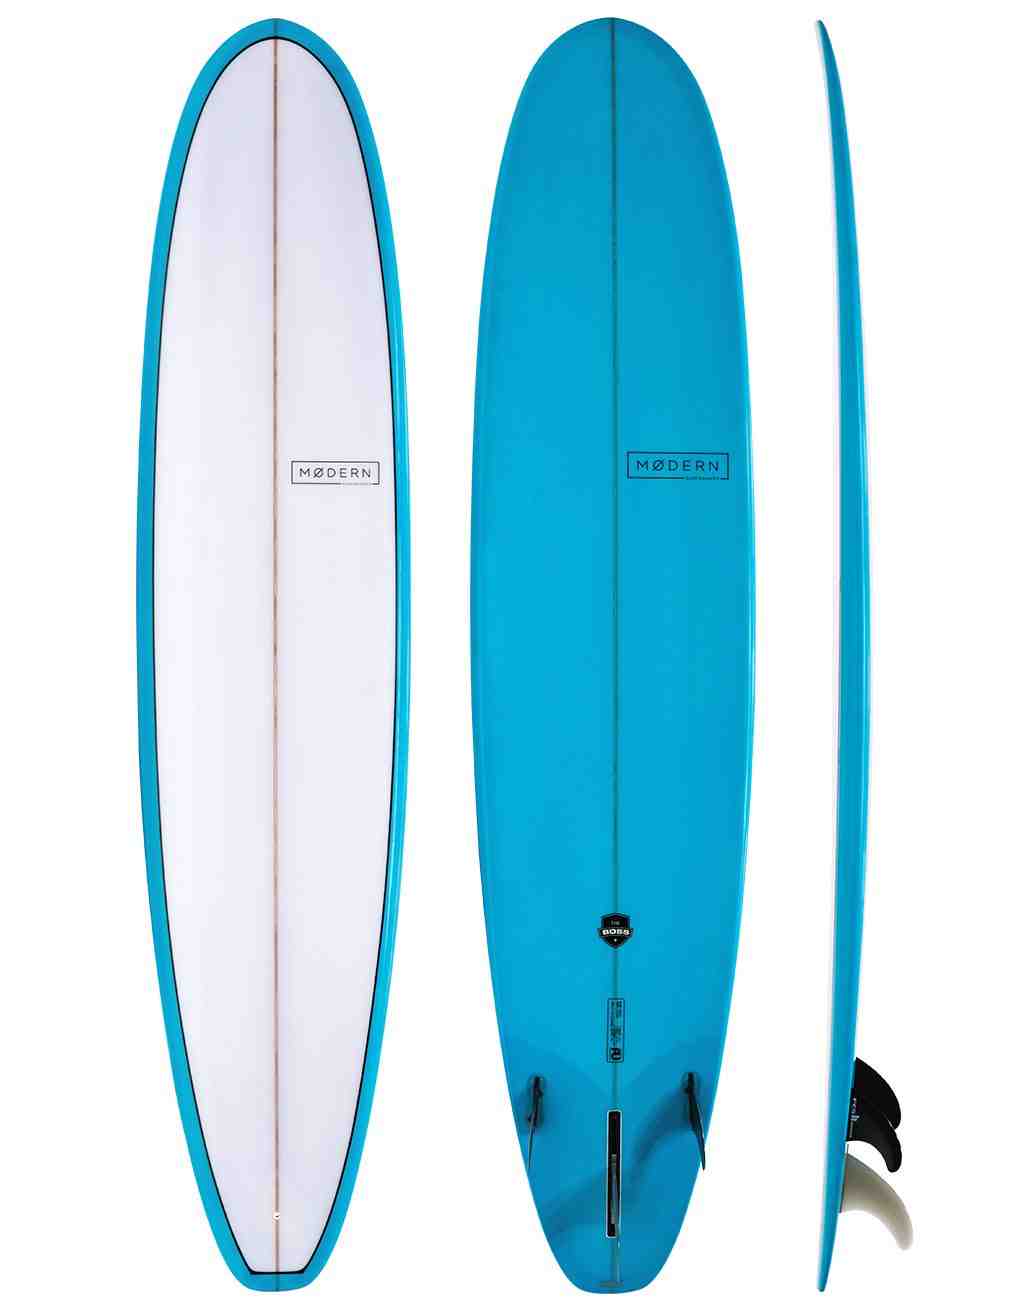 Quel surf acheter ?